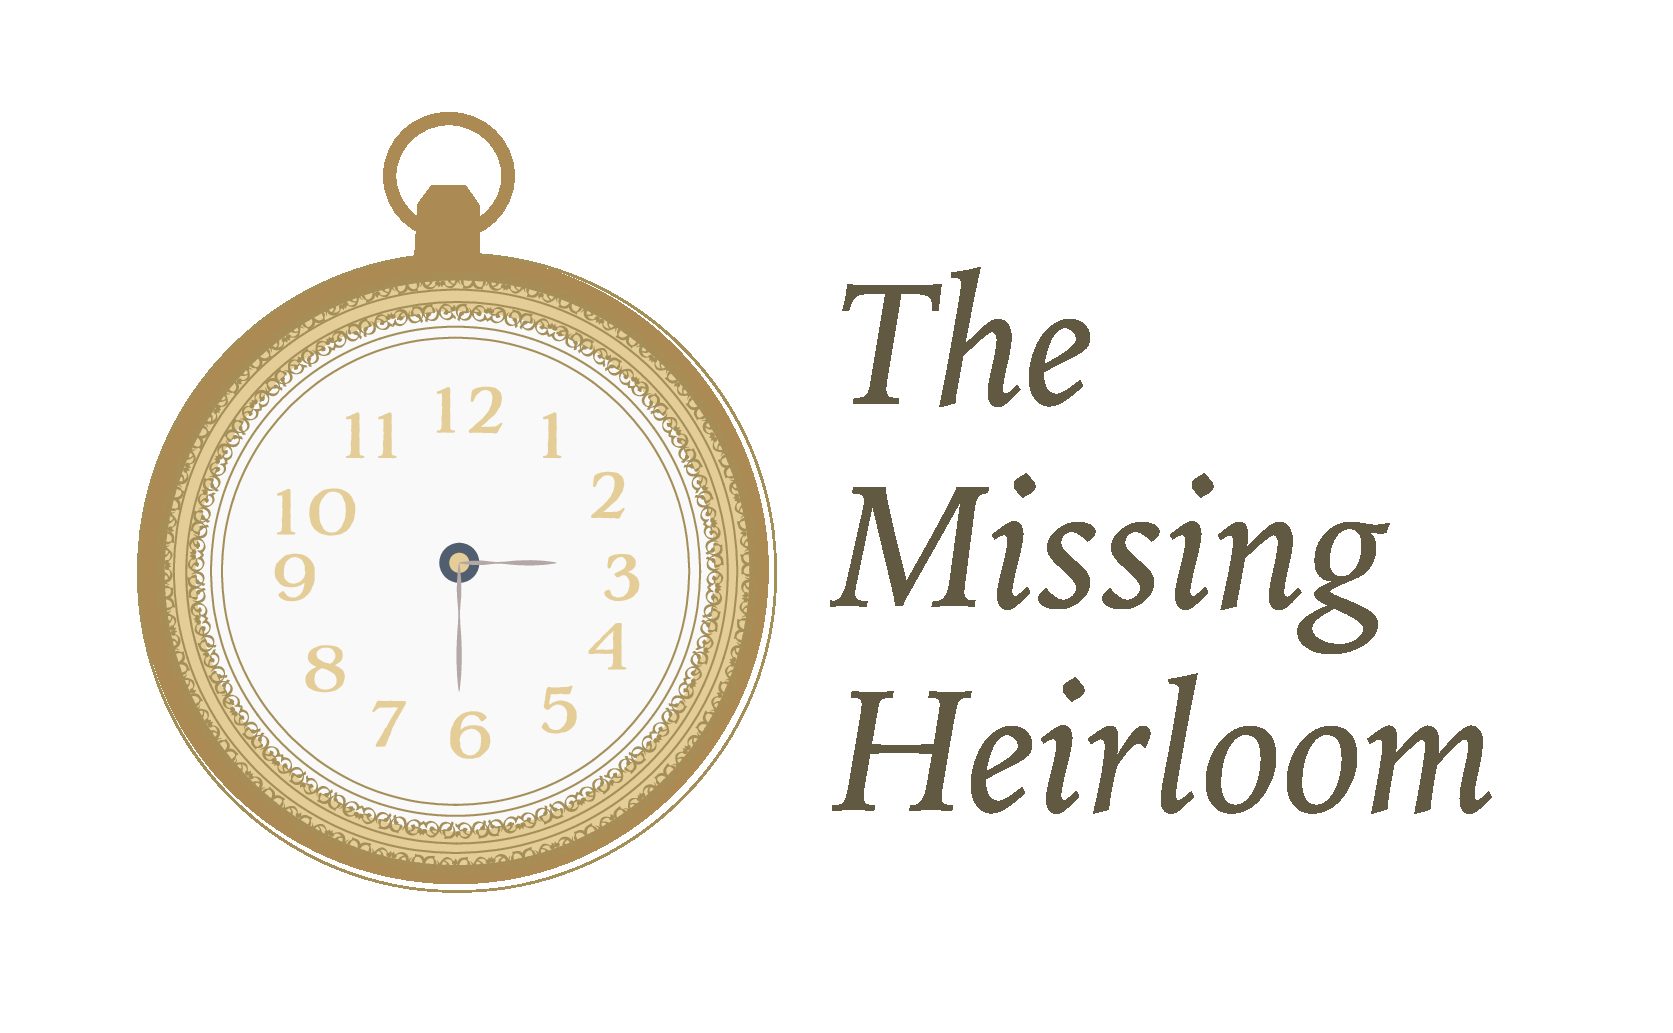 The Missing Heirloom